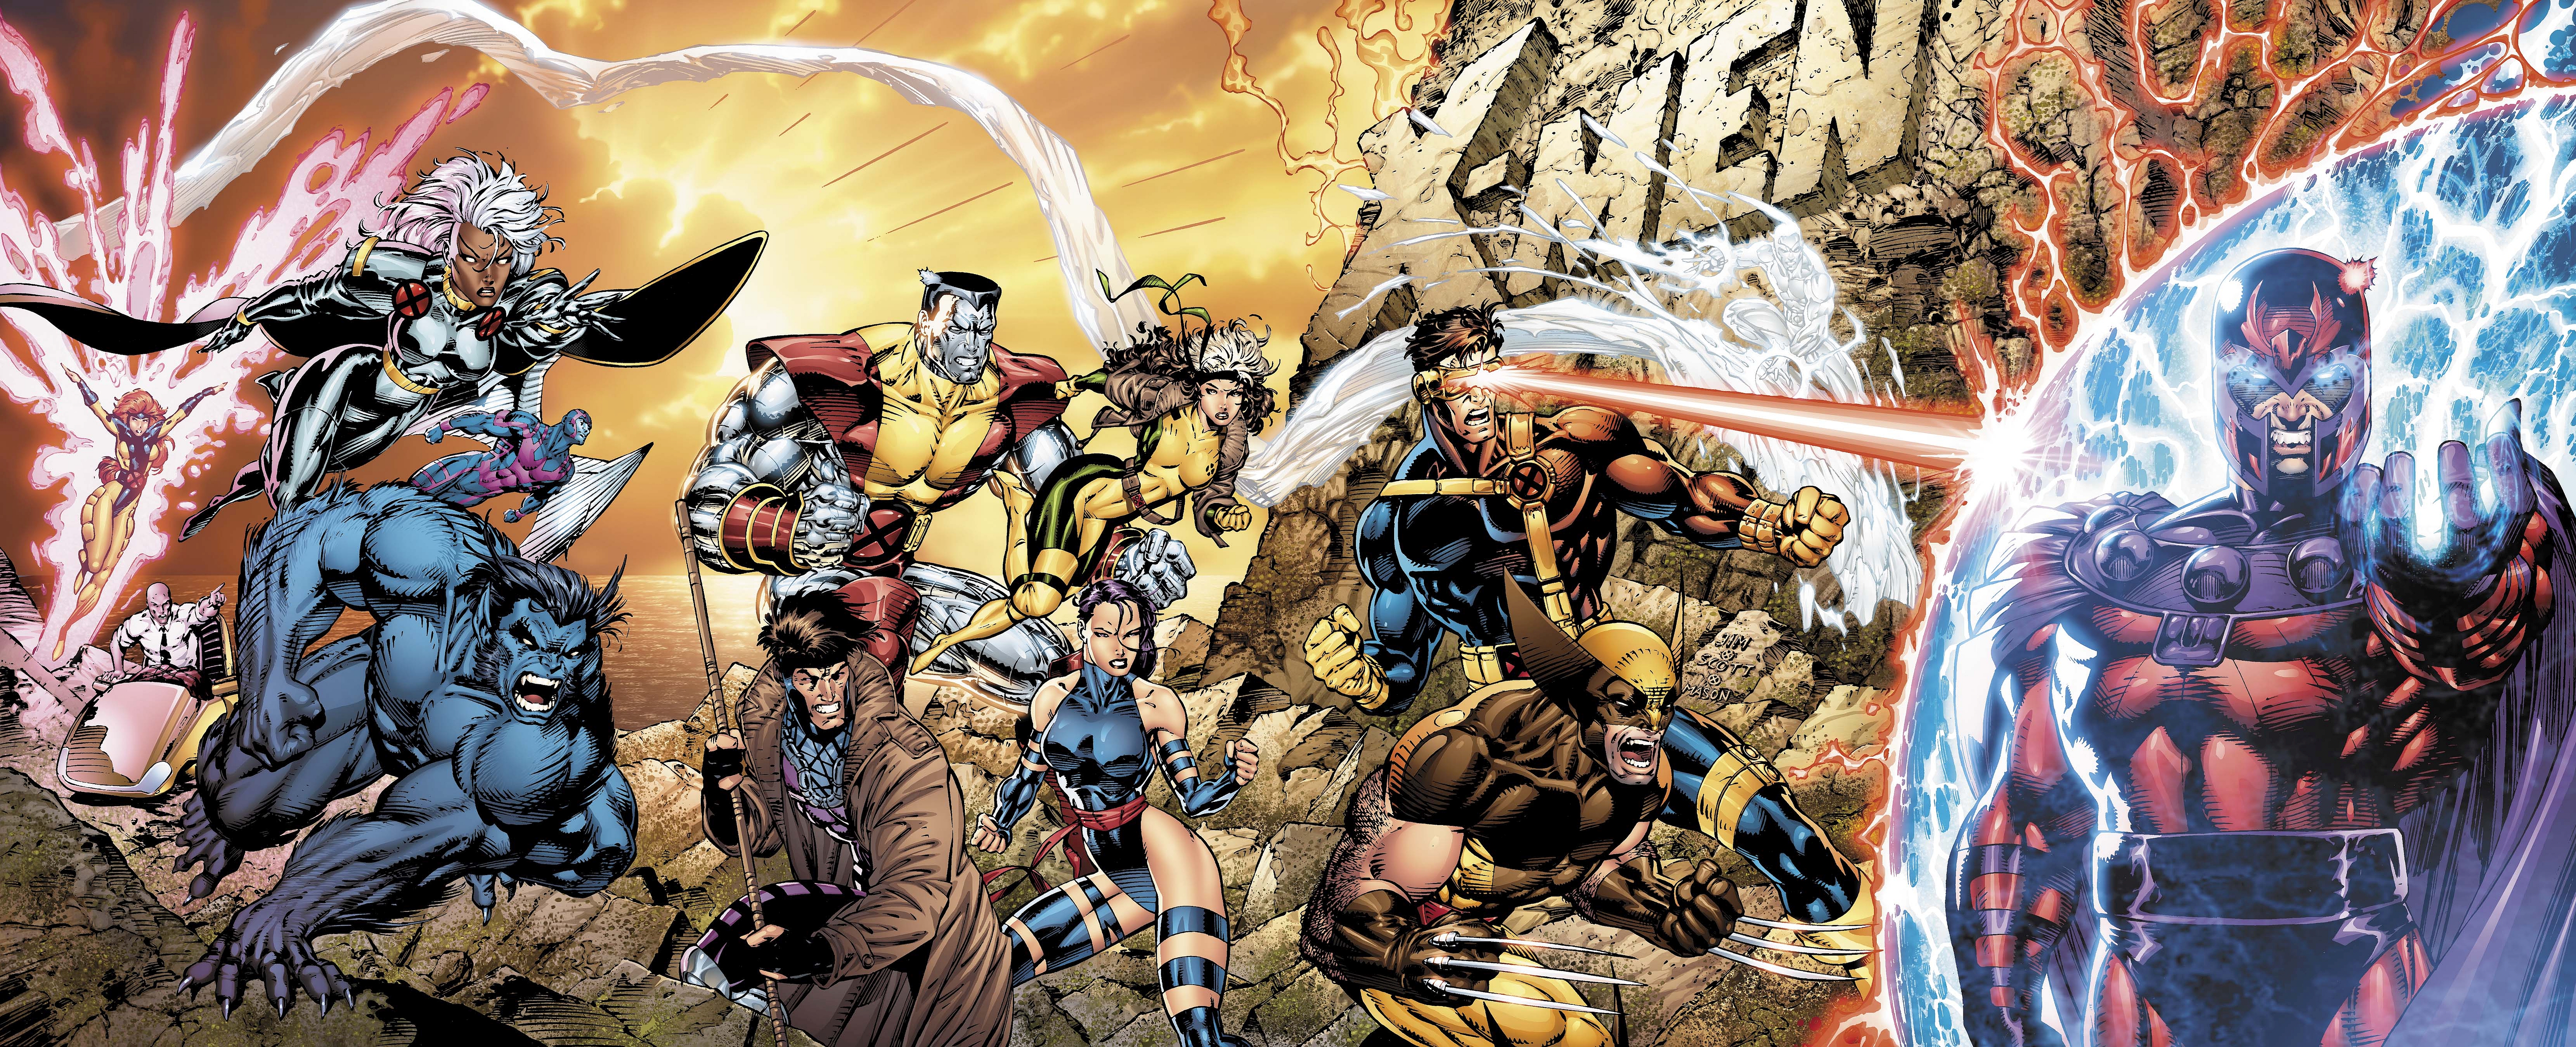 X-Men 4k Ultra HD Wallpaper by Jim Lee